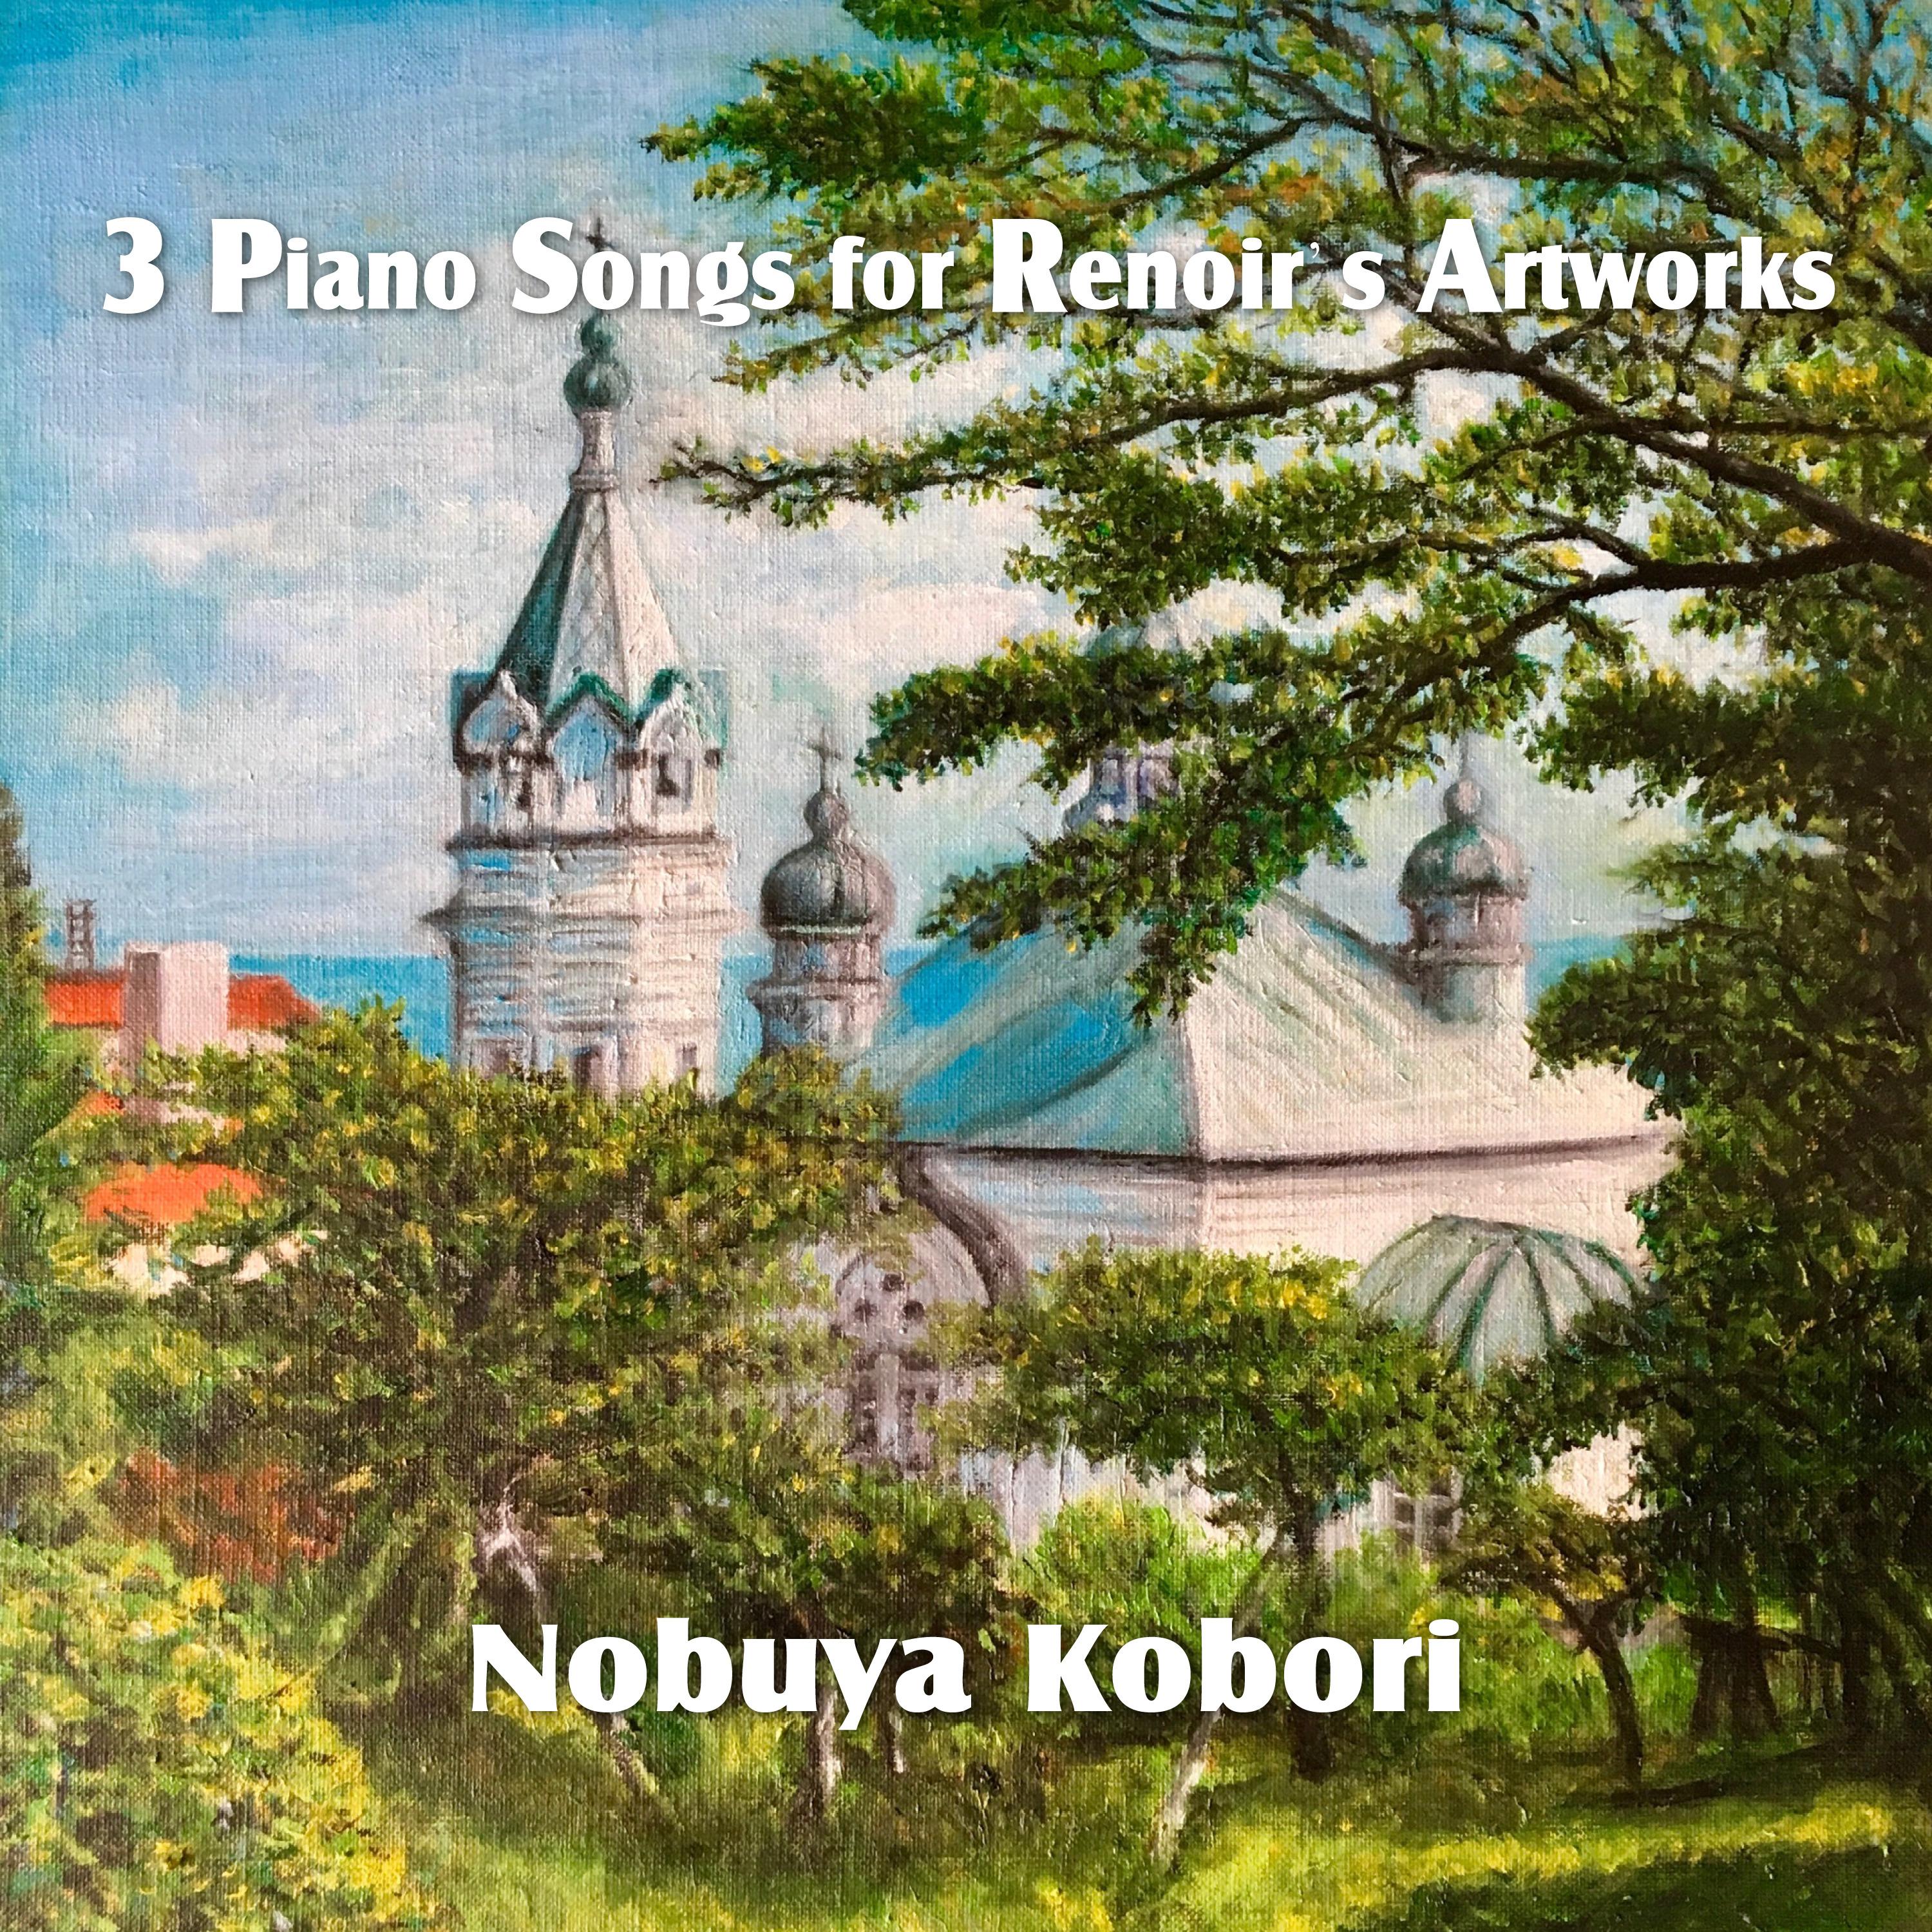 3 Piano Songs for Renoir' s Artworks